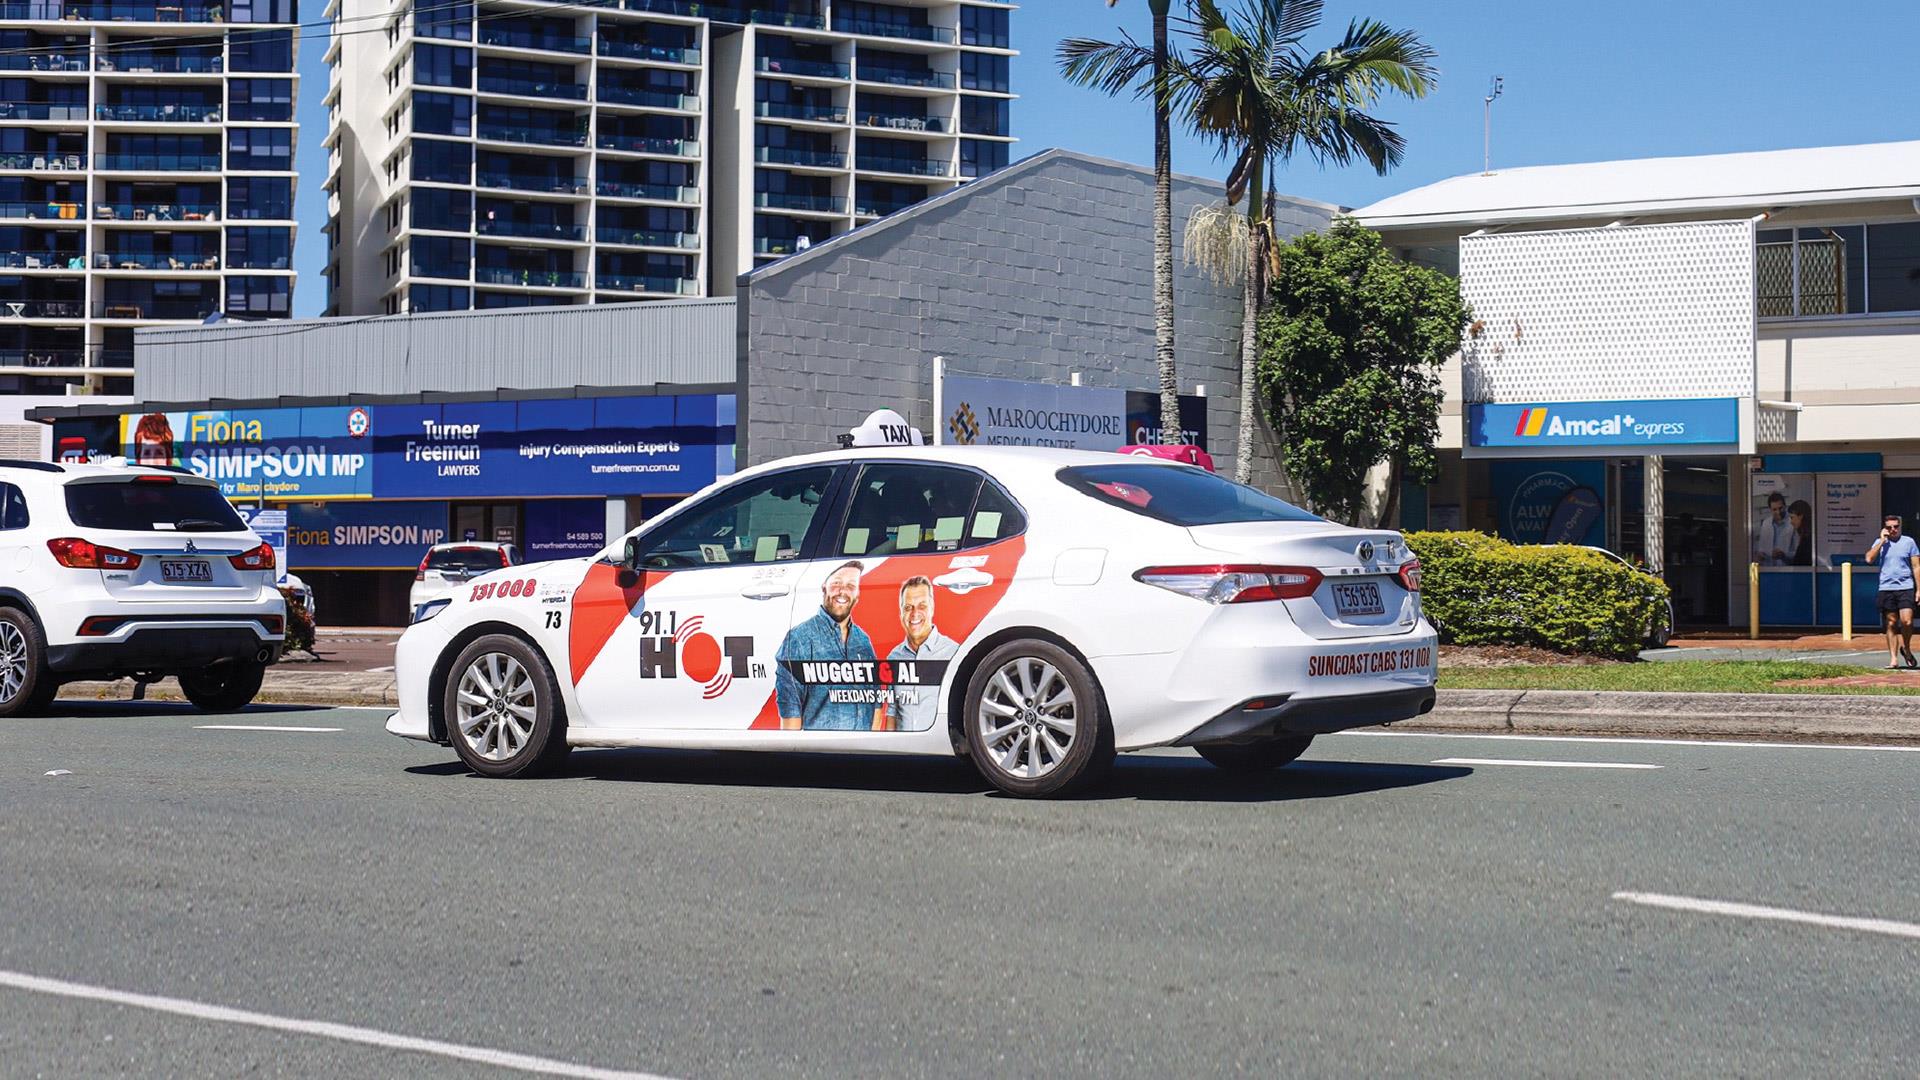 Seafm advertising on a sunshine coast taxi